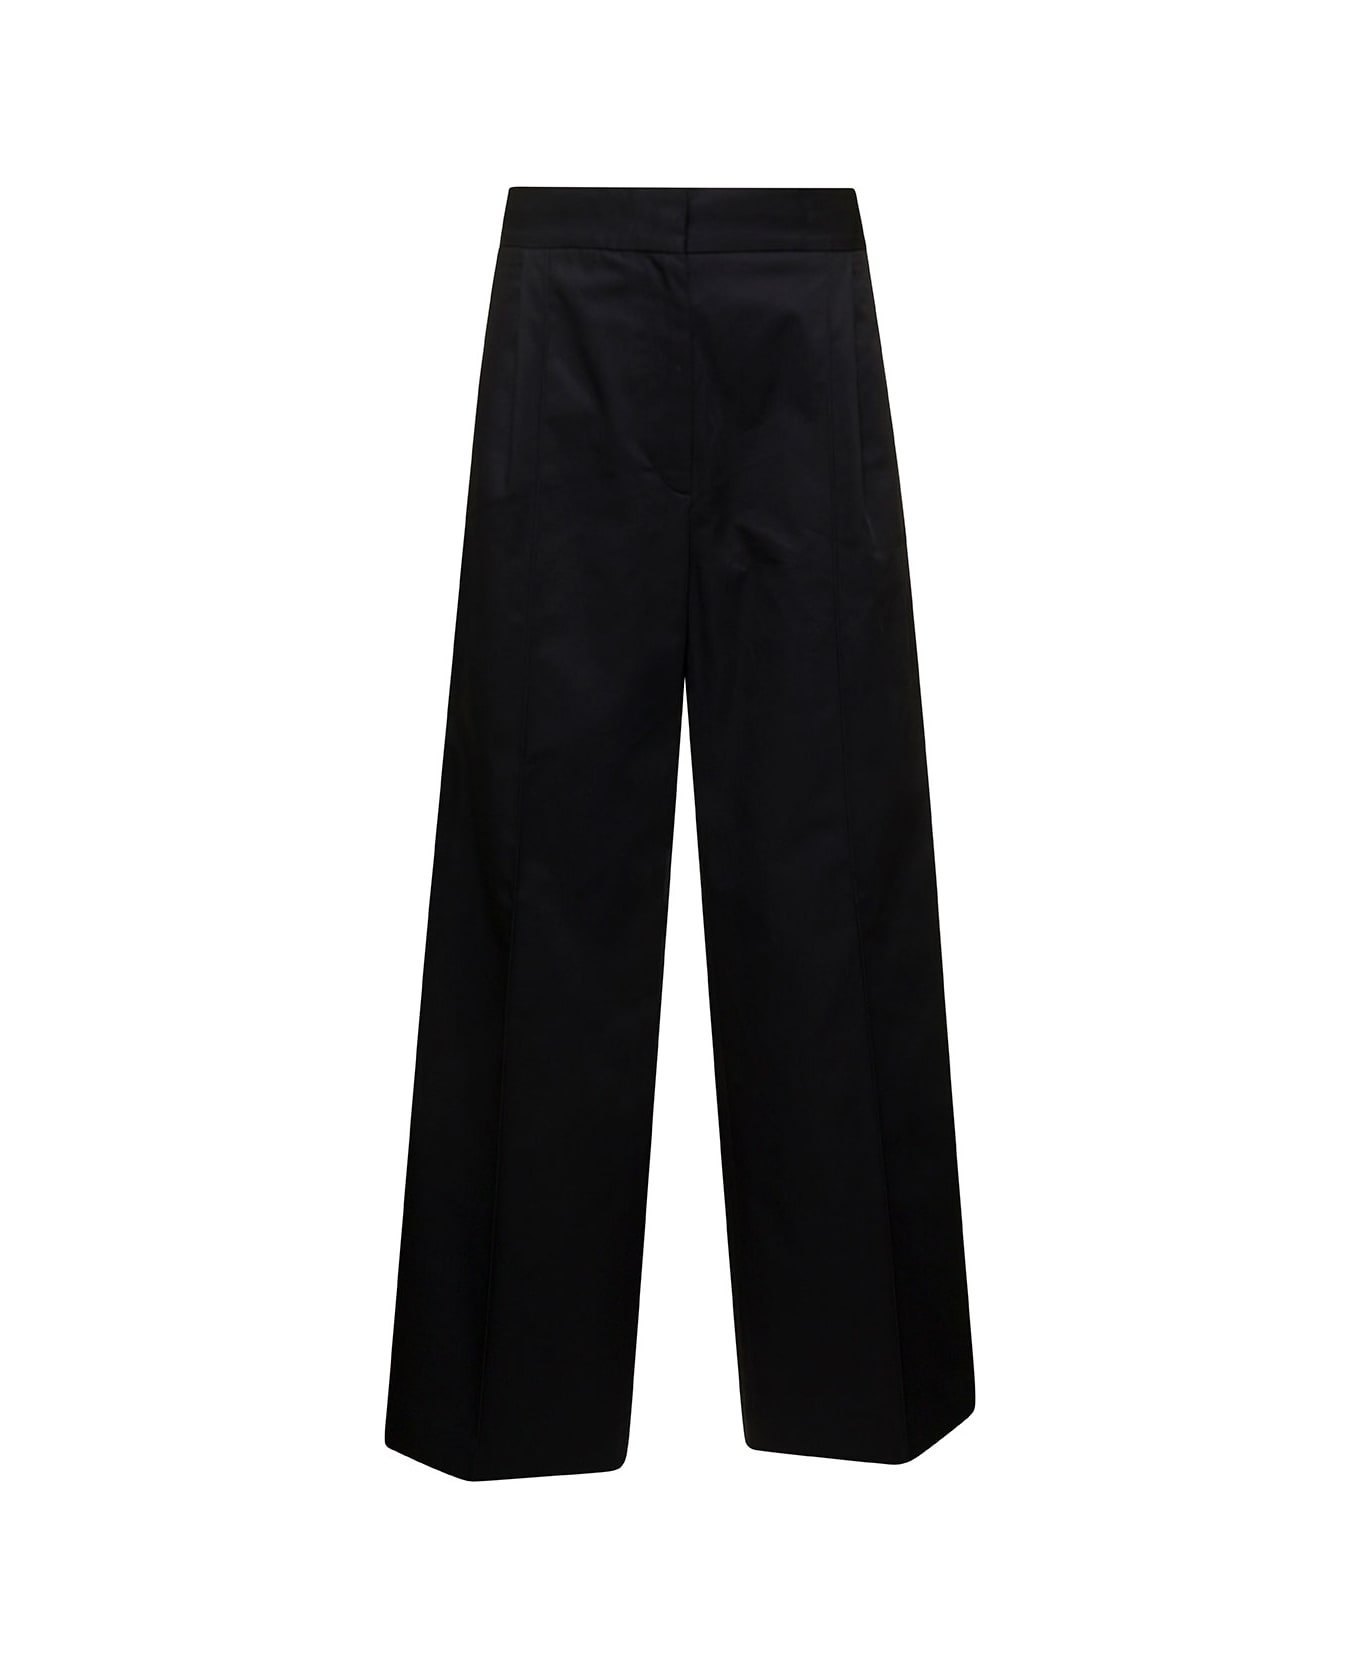 Maison Kitsuné Black Loose Pants With Concealed Closure In Cotton Woman - Black